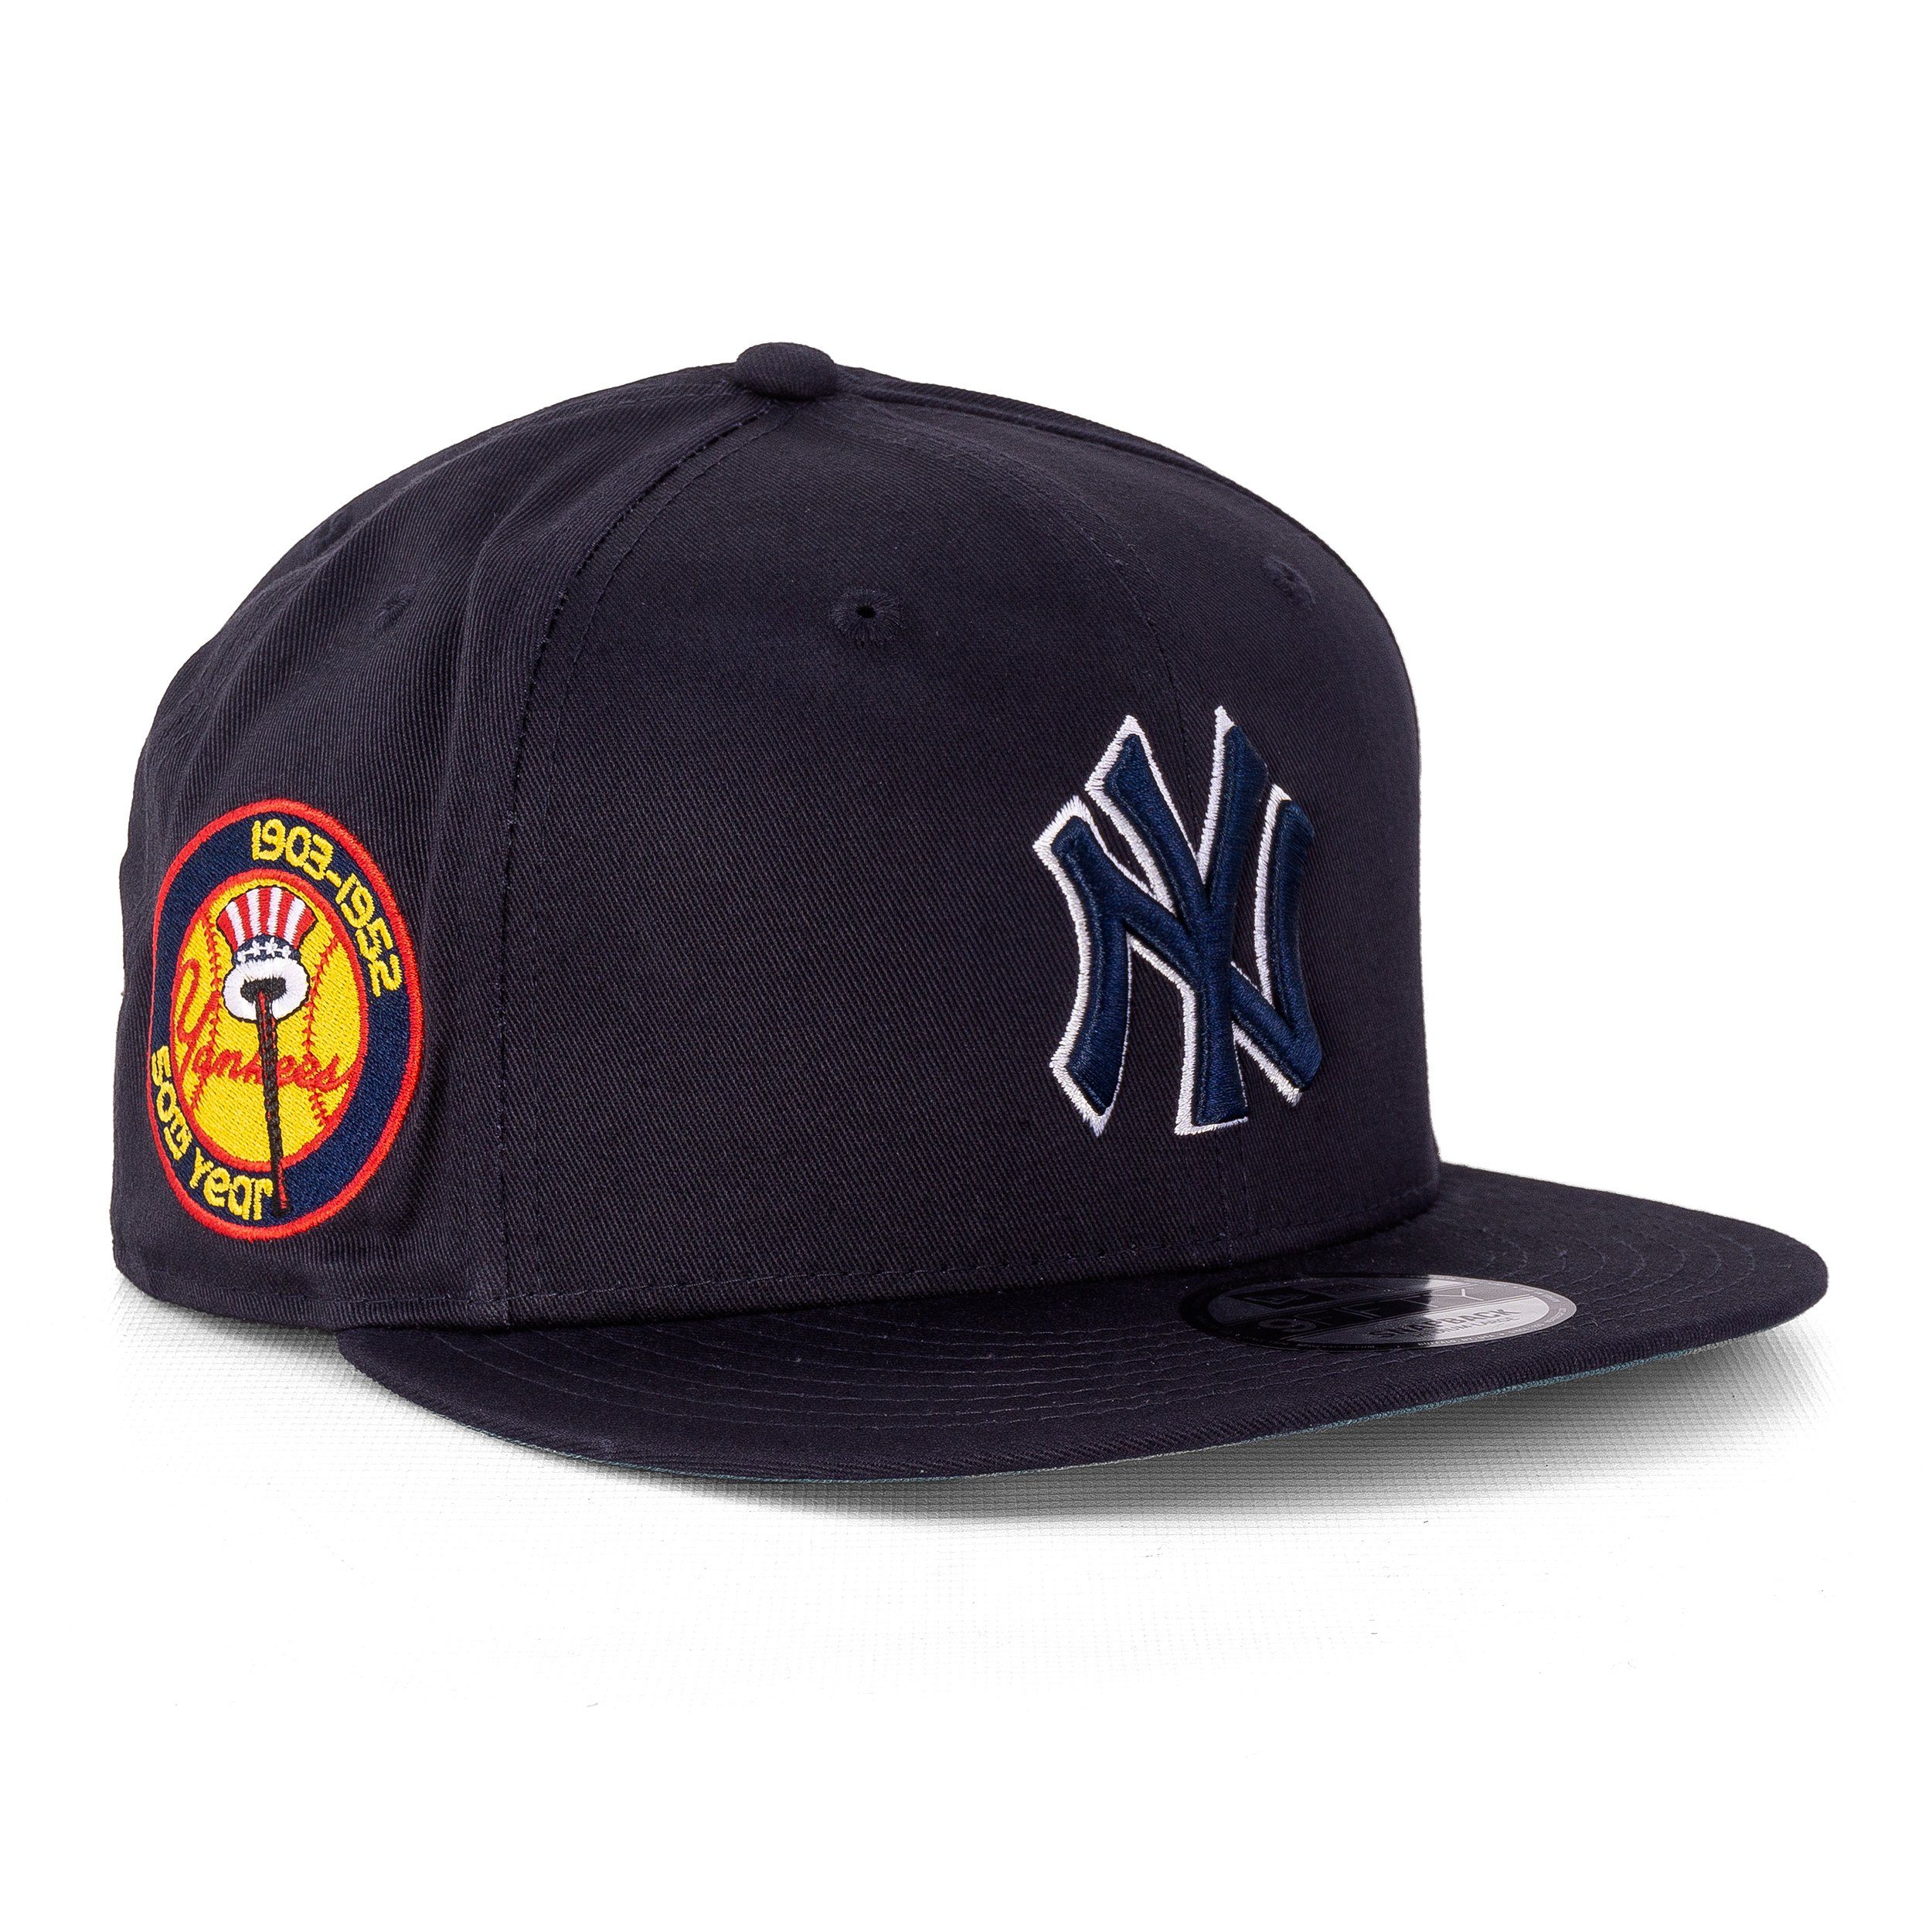 Baseball Era Side Cap New New (1-St) Era Cap York New Yankees 9Fifty Patch